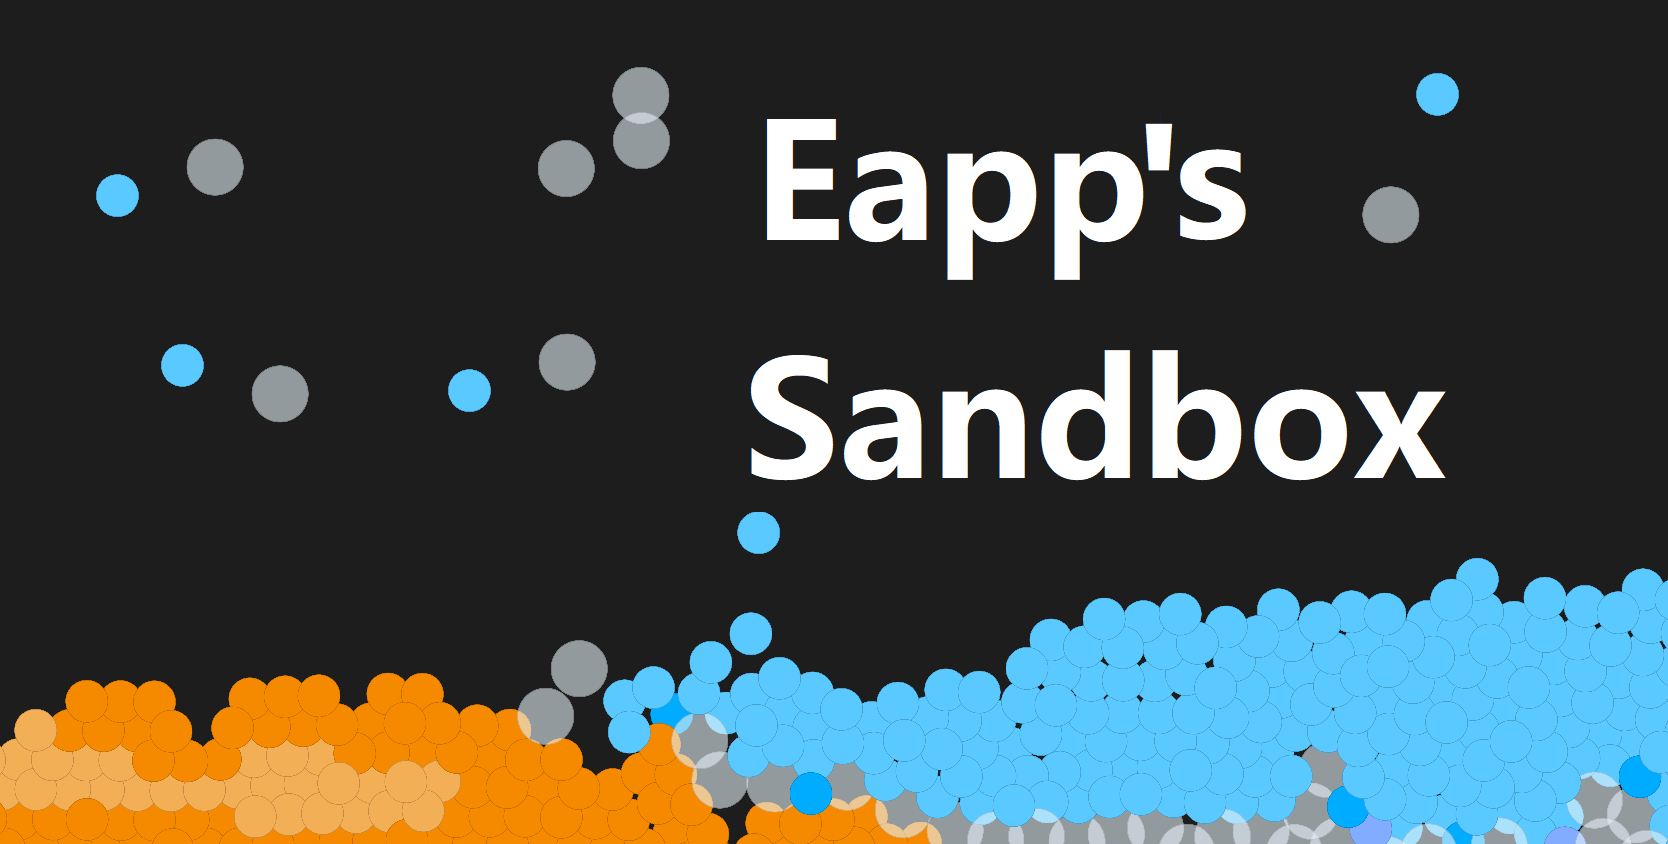 Eapple's Sandbox